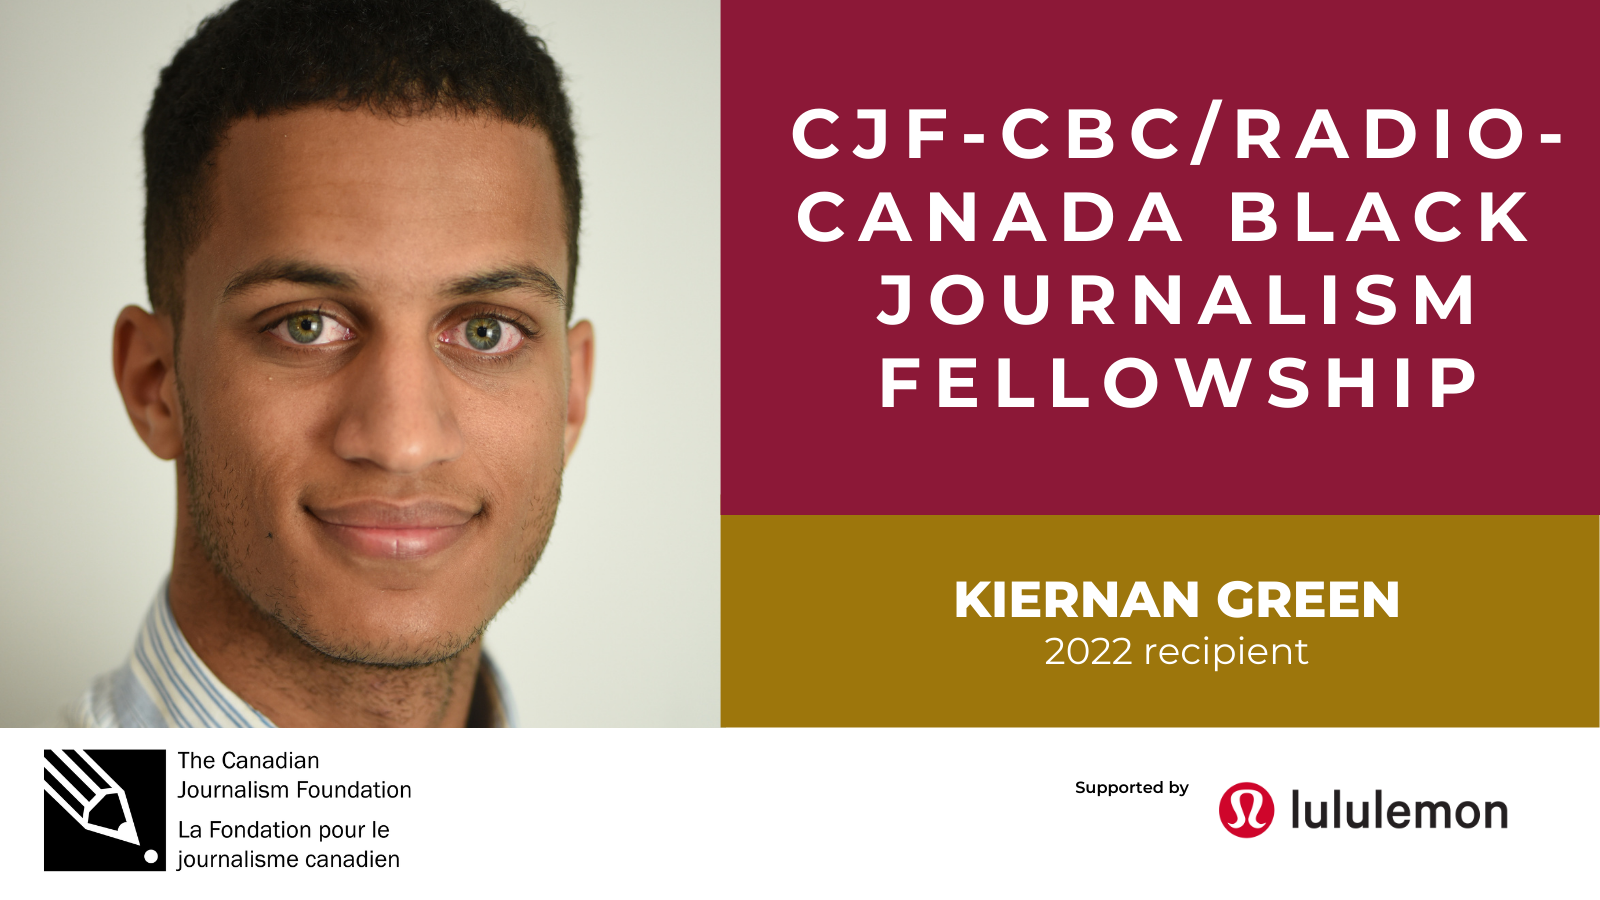 CJF-CBC/RADIO-CANADA BLACK JOURNALISM FELLOWSHIP. Kiernan Green.